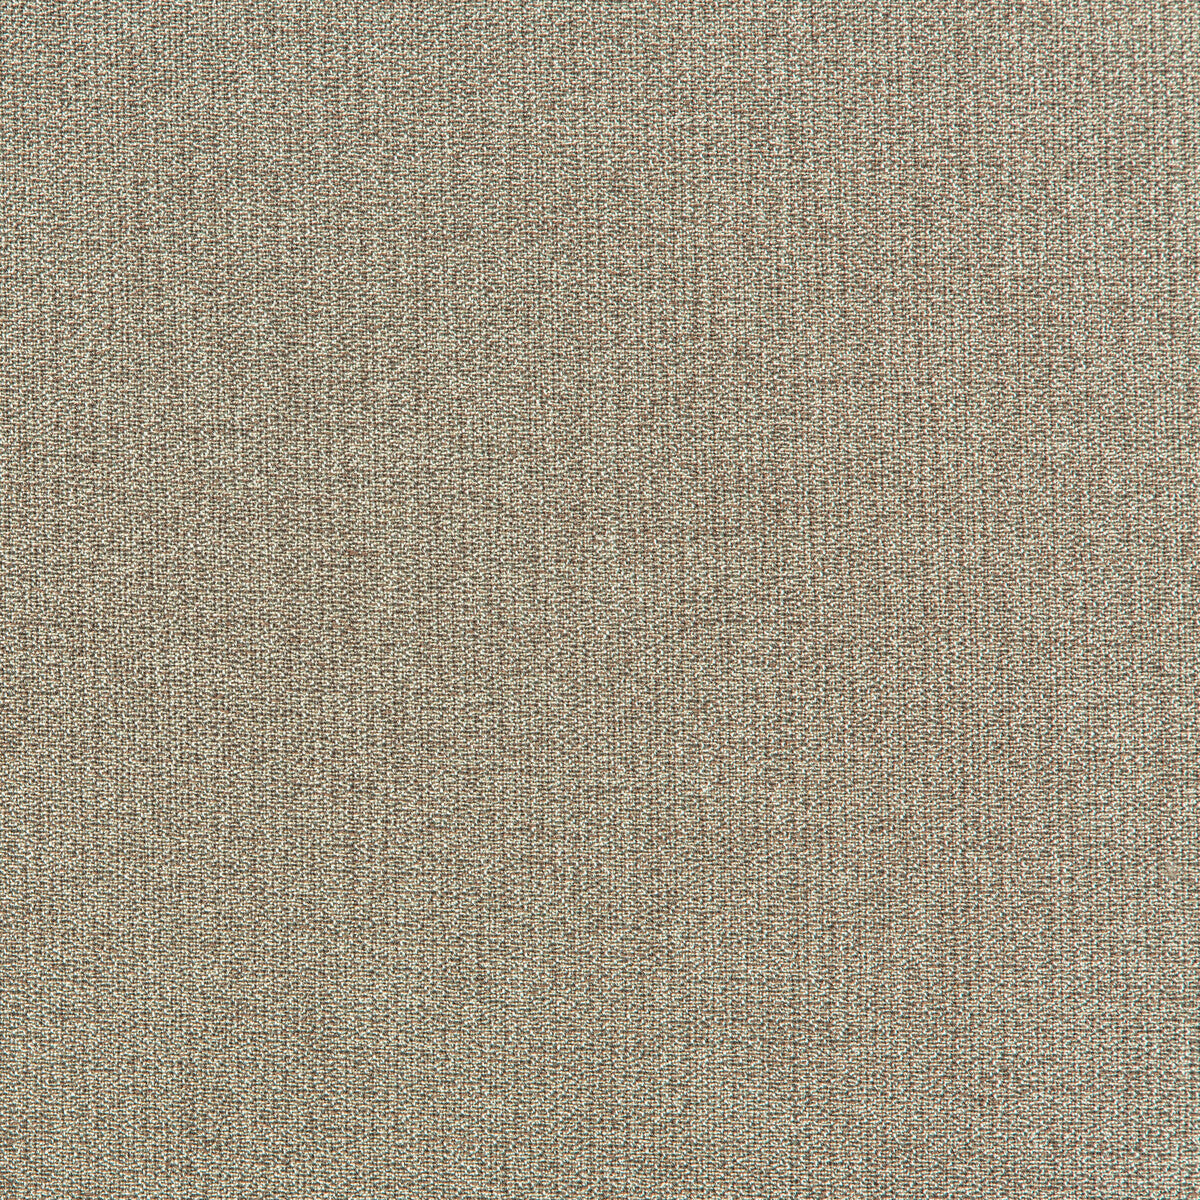 Kravet Smart fabric in 35942-11 color - pattern 35942.11.0 - by Kravet Smart in the Performance Kravetarmor collection